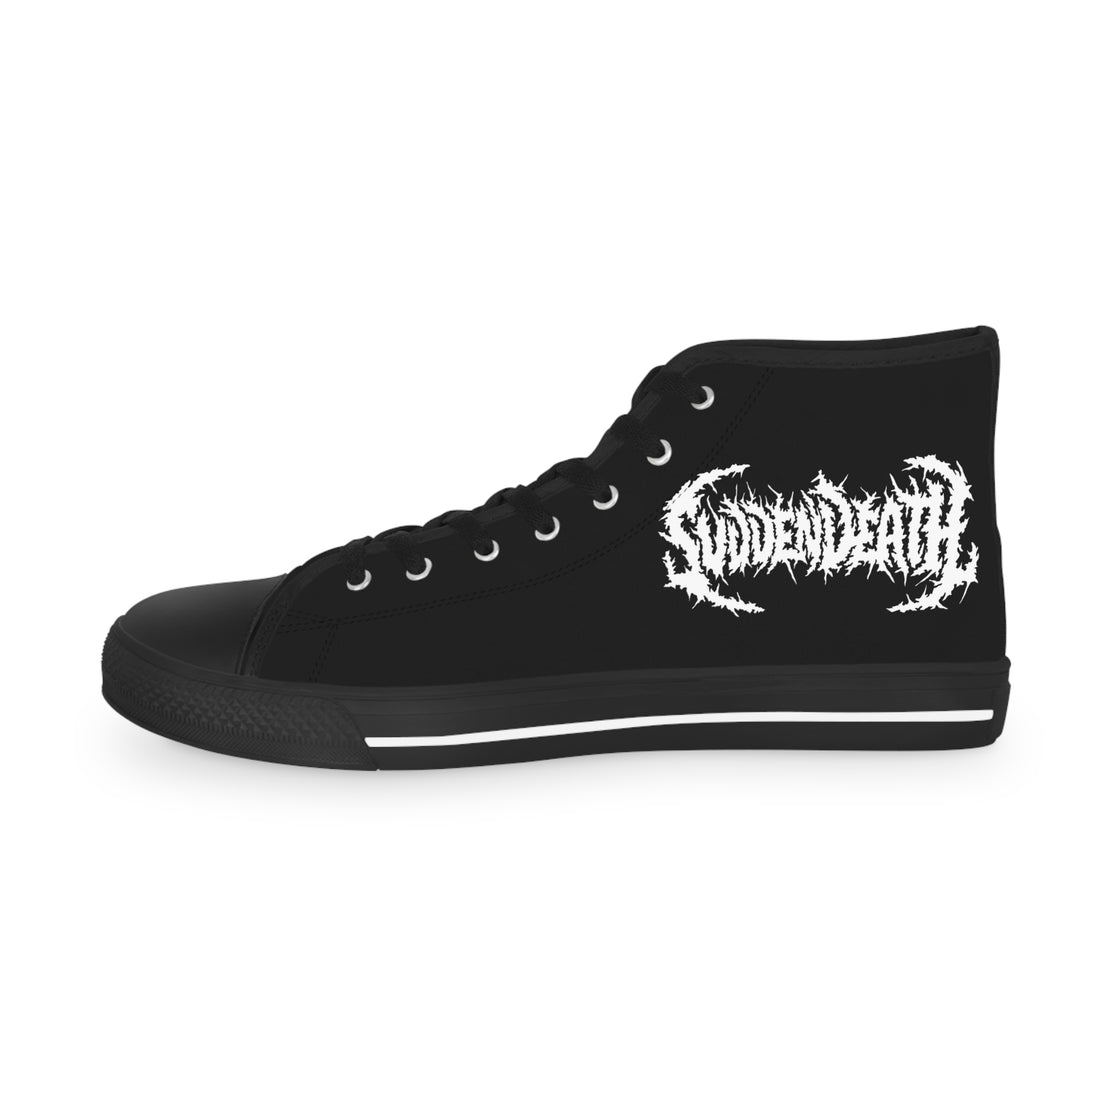 Svdden Death Converse Style Shoes